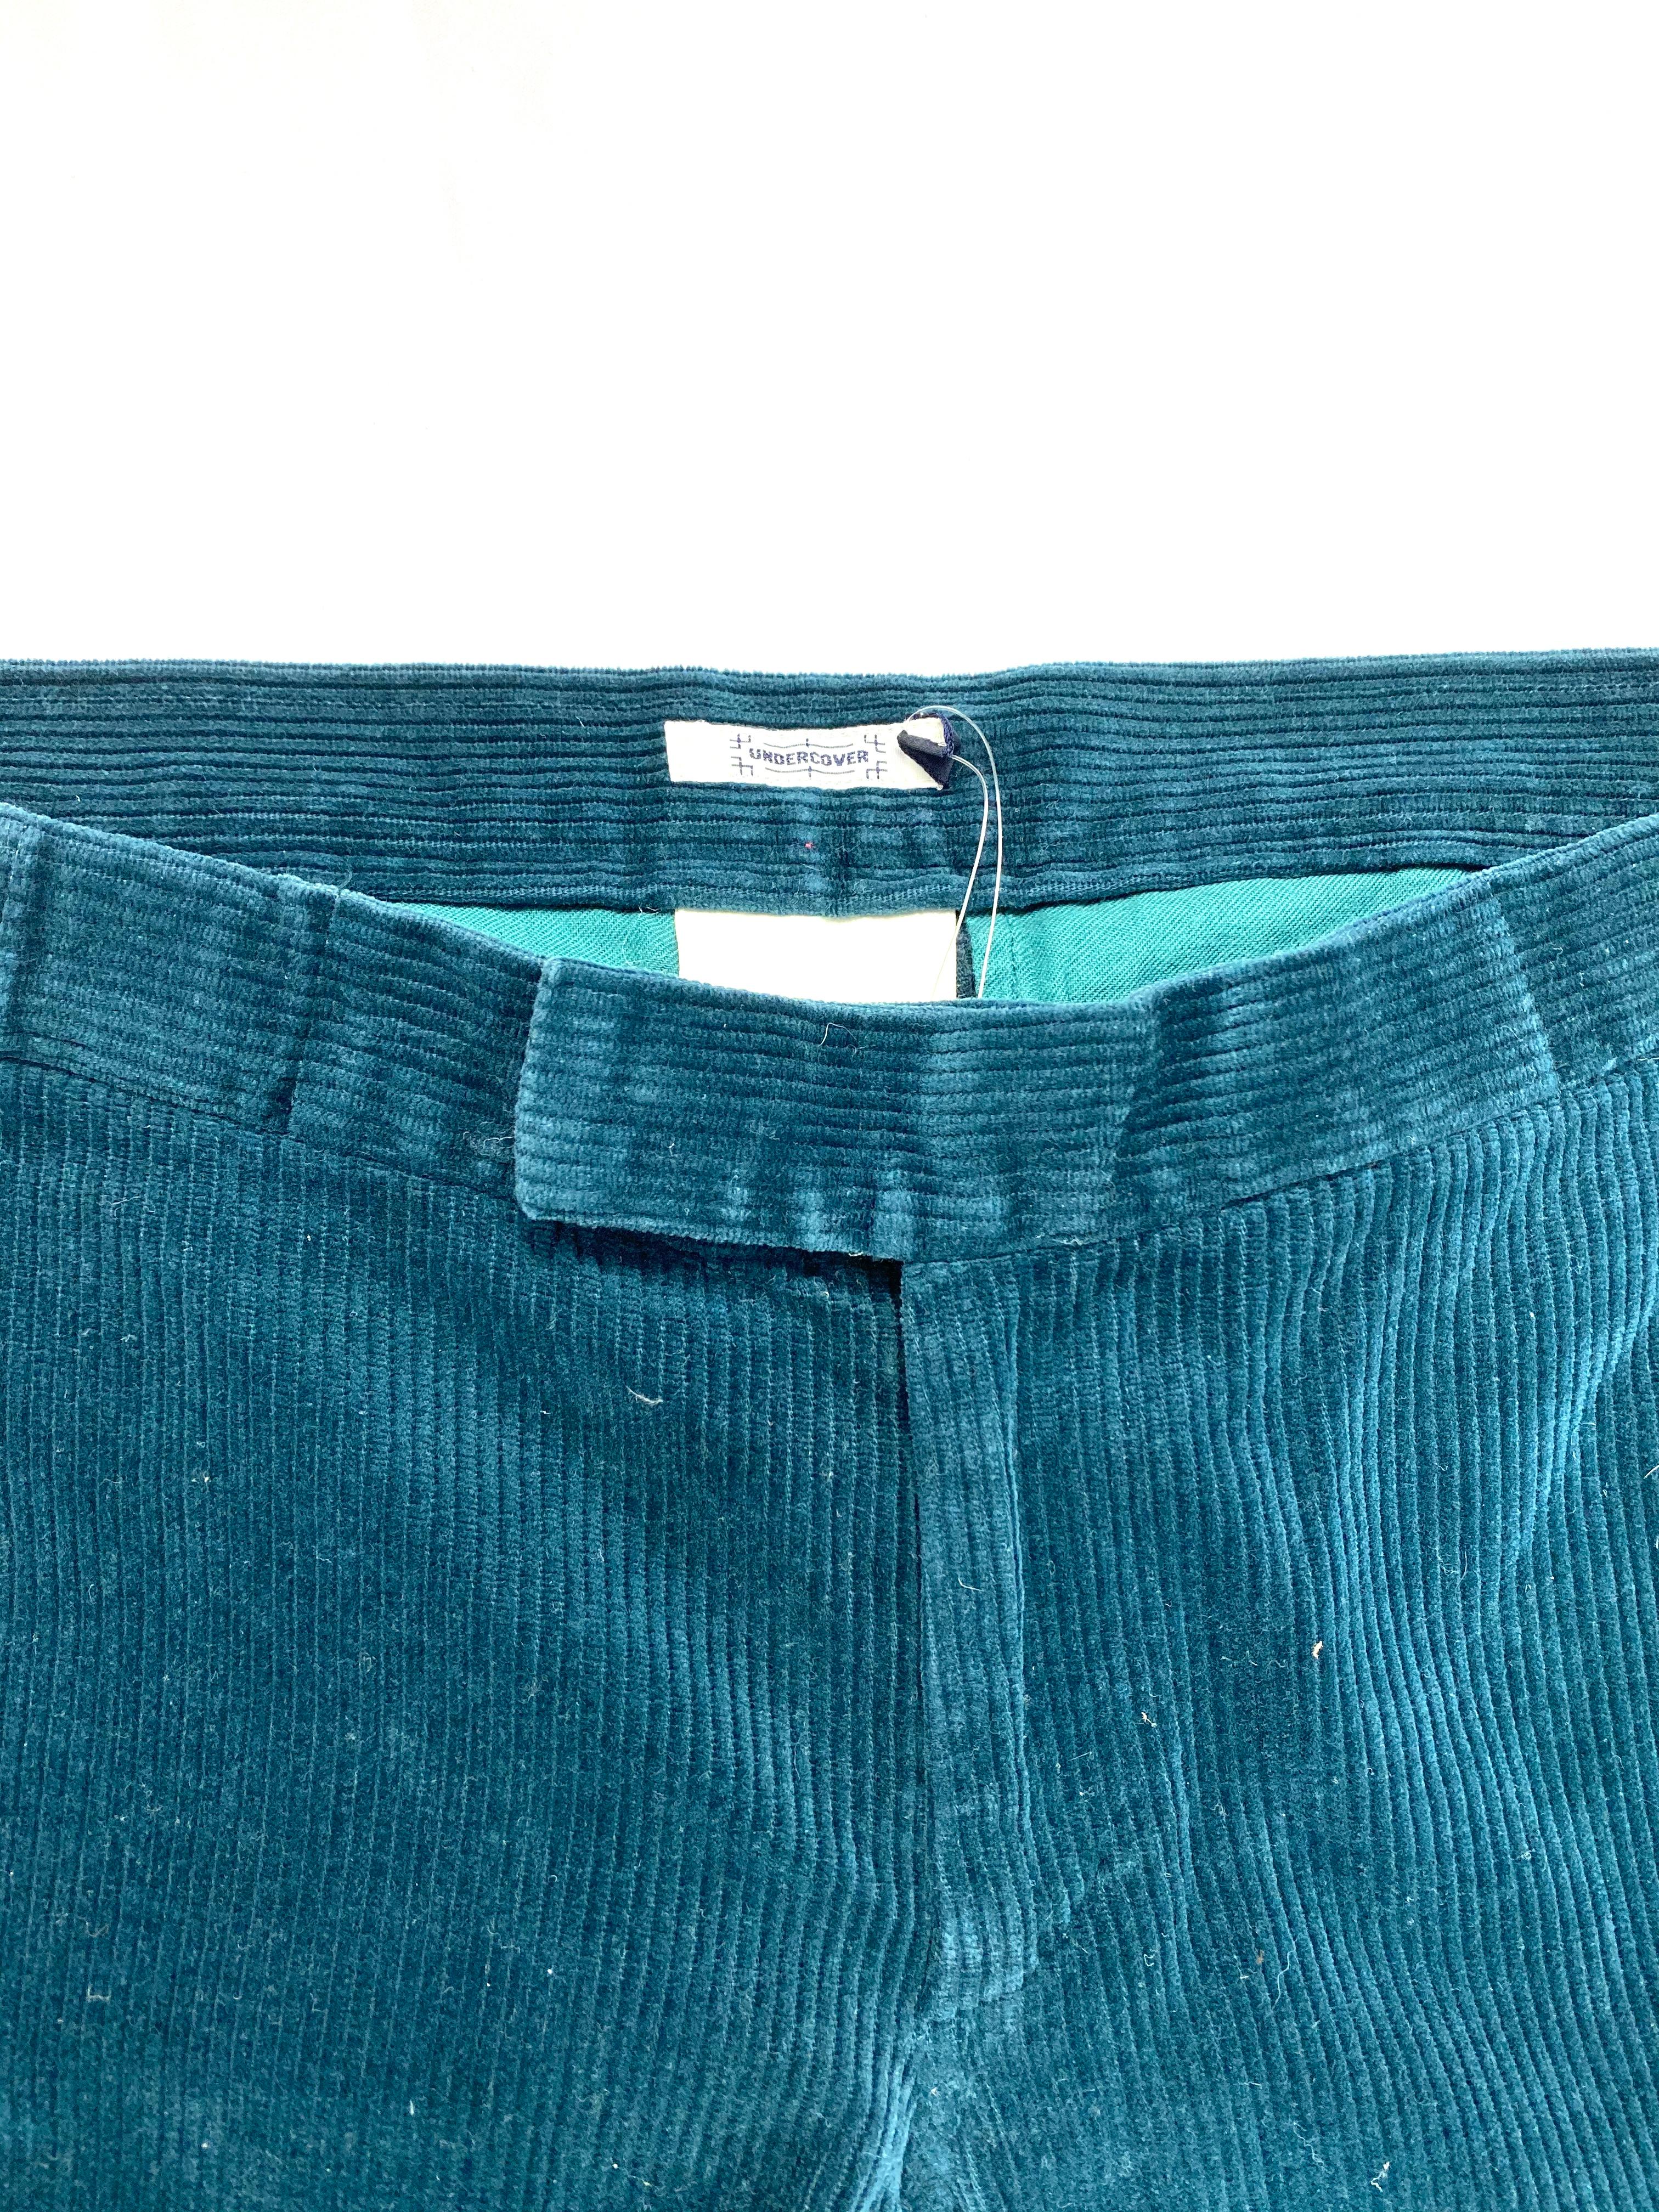 Bleu Pantalon skinny Jun Takahashi turquoise en velours côtelé taille S en vente